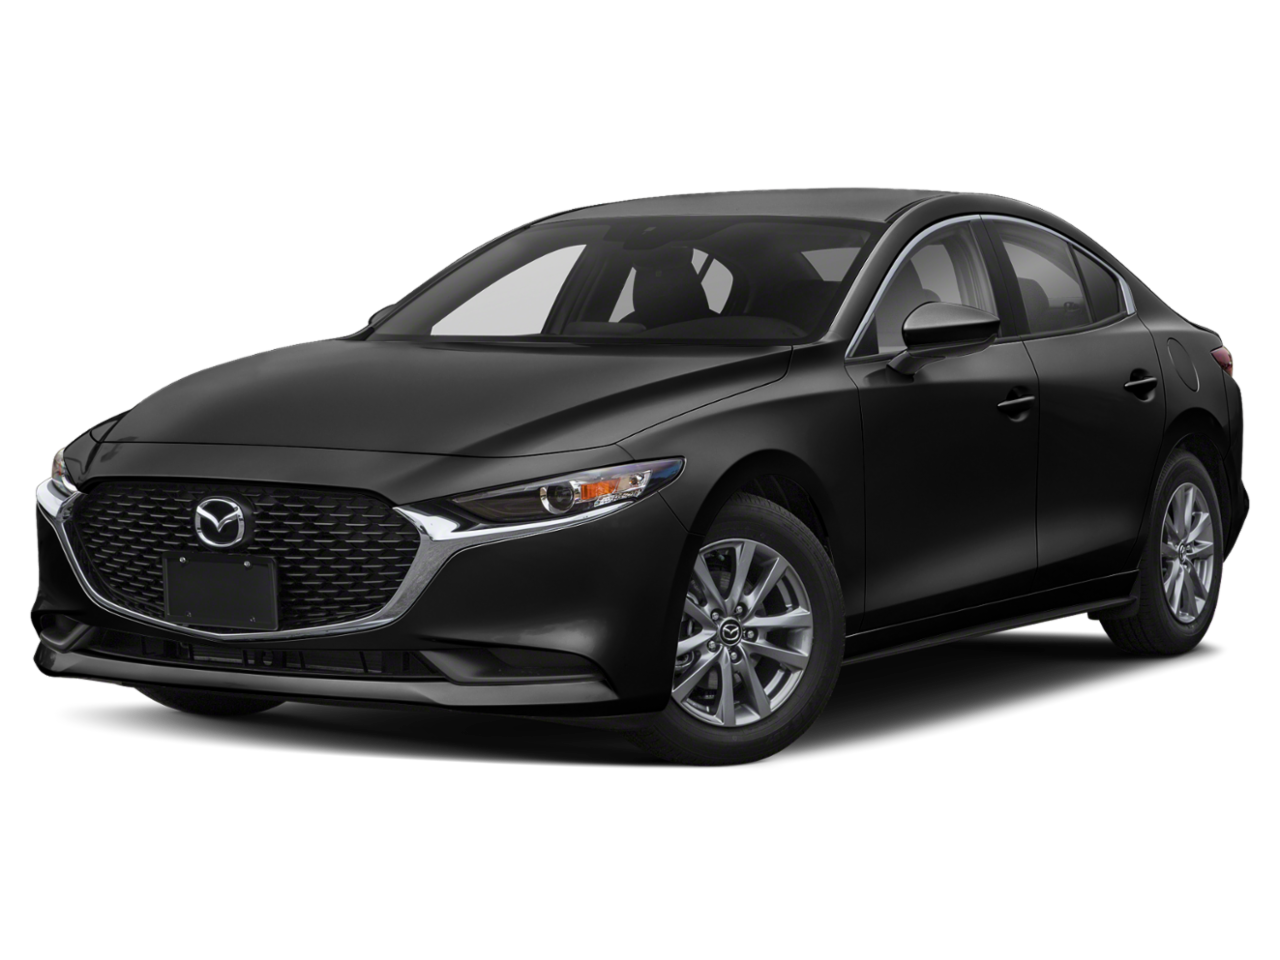 New 2020 Mazda Mazda3 Sedan Details from Garlyn Shelton Auto Group's